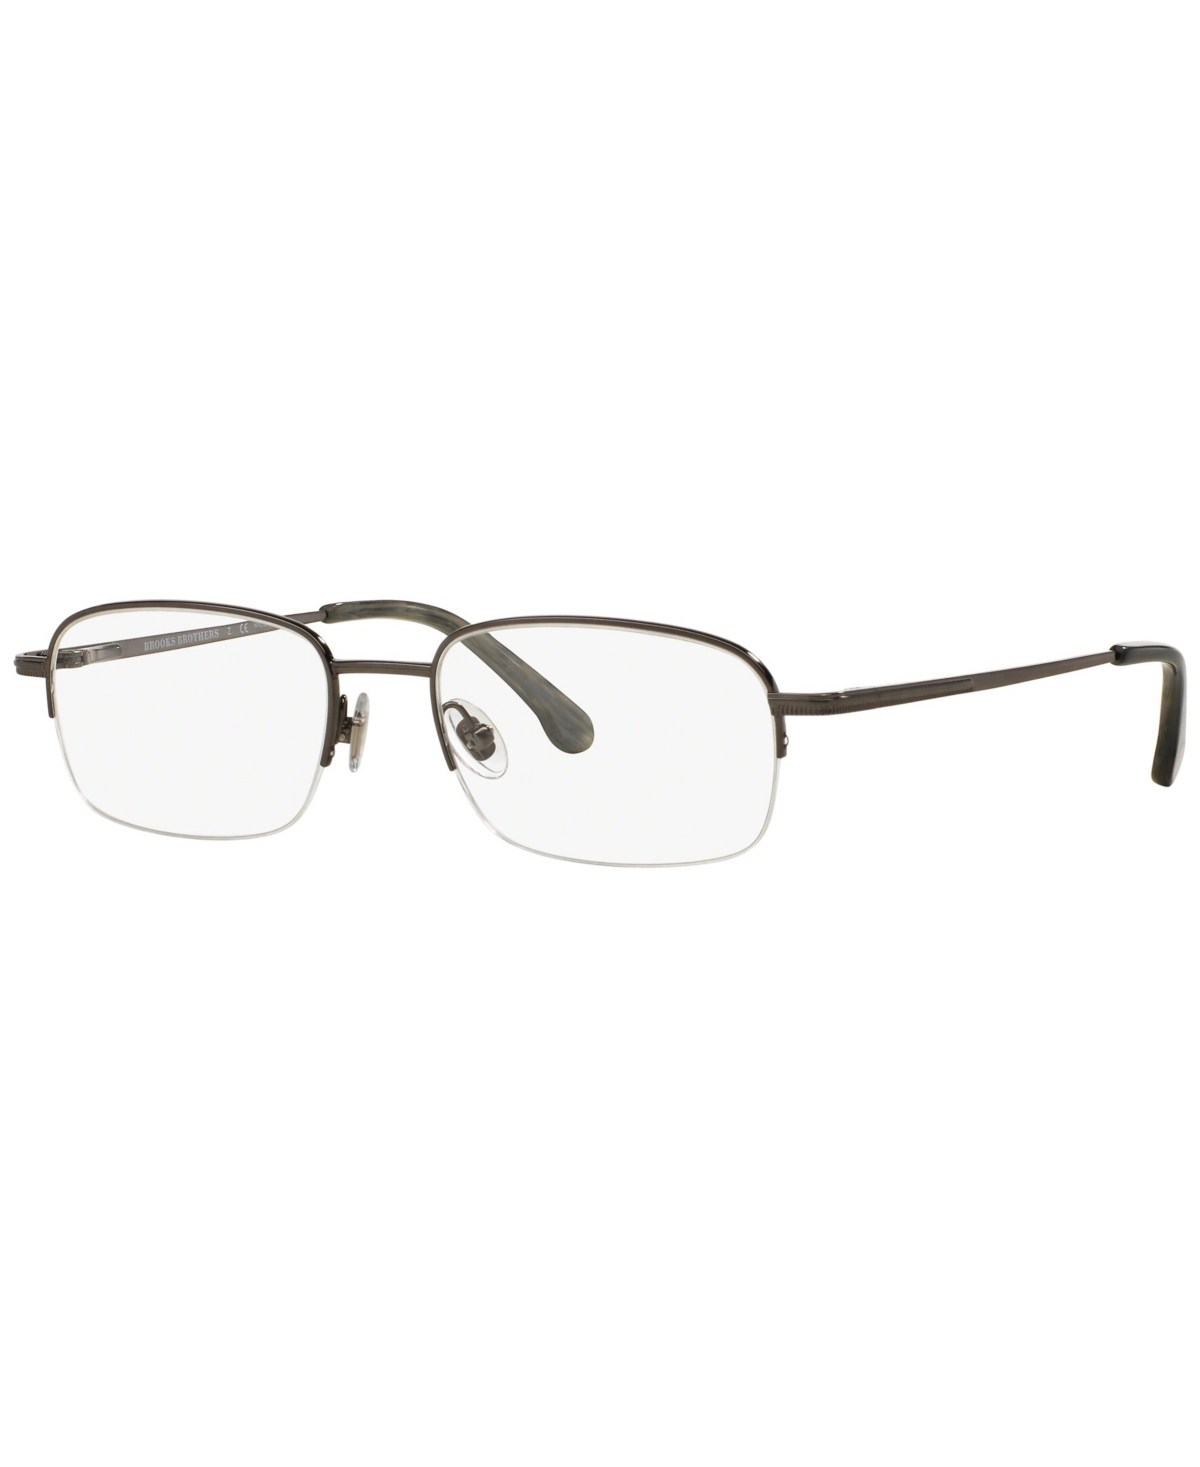 Men's Eyeglasses, Bb 487T 52 - Dark Gunmetal Titanium